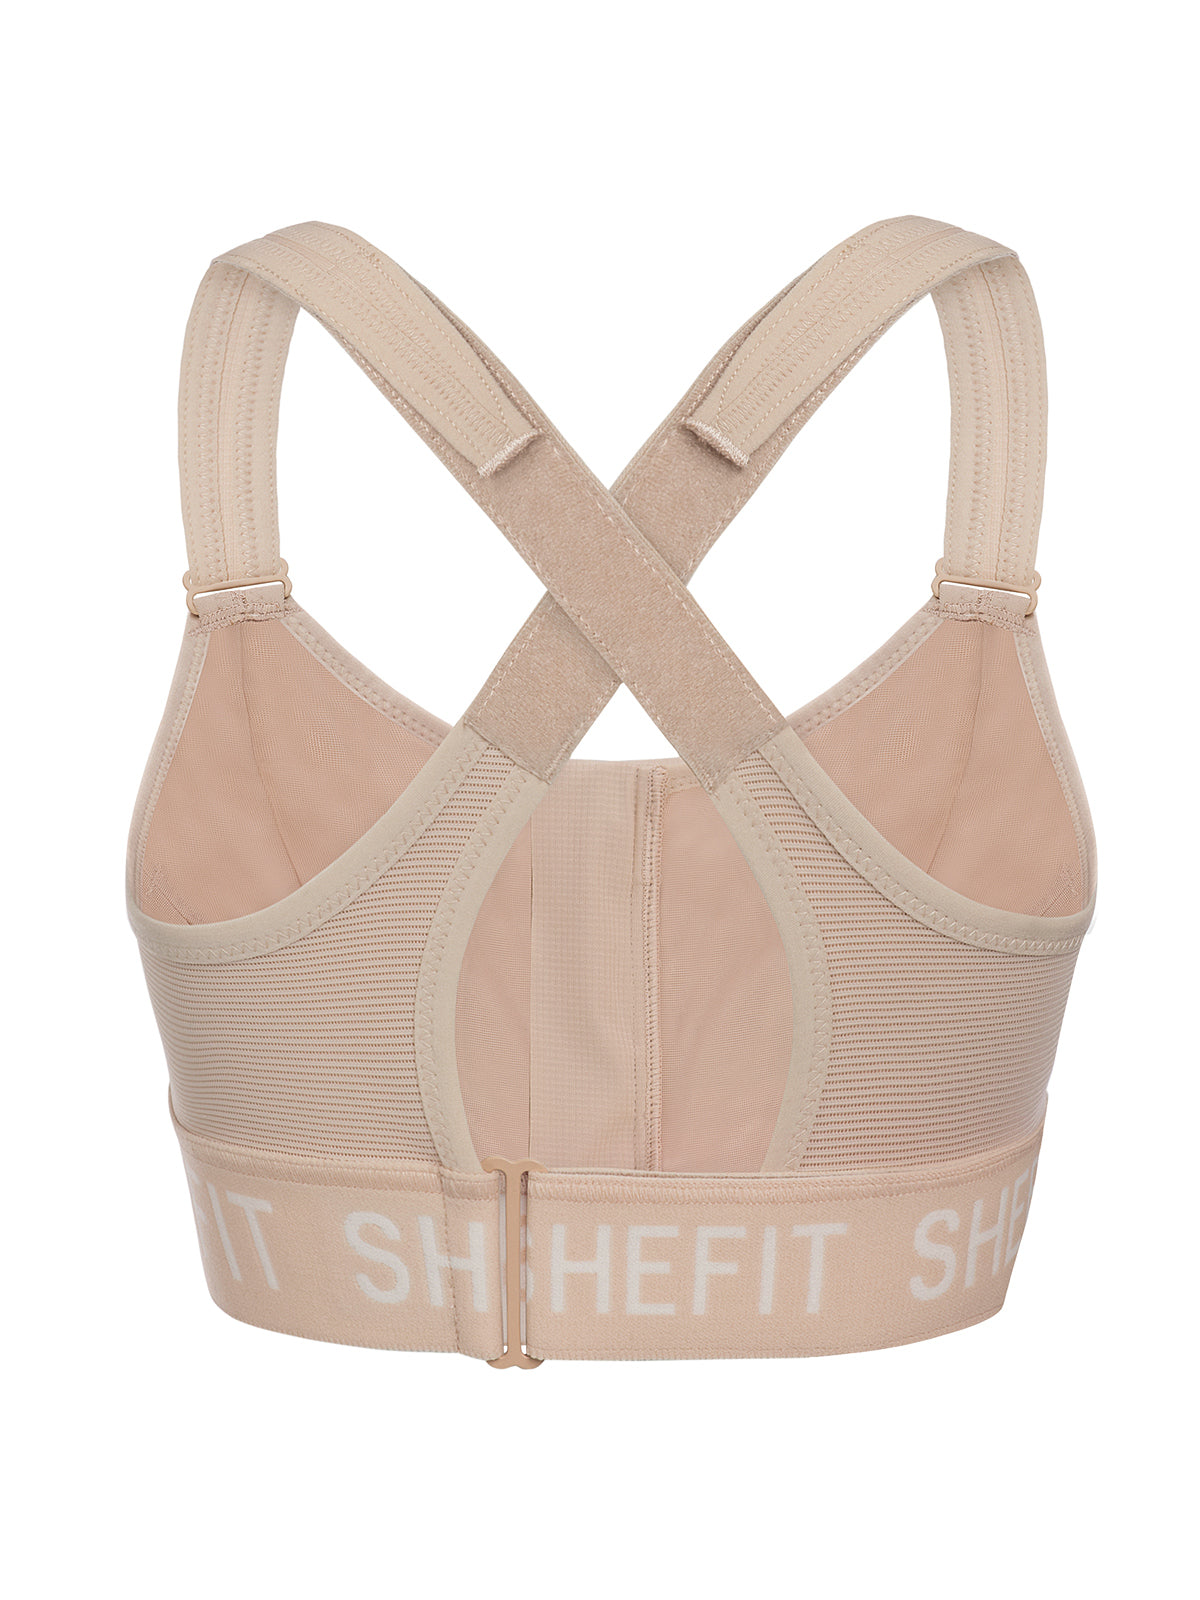 SHEFIT Women's High Impact Ultimate Sports Bra 2Luxe Size